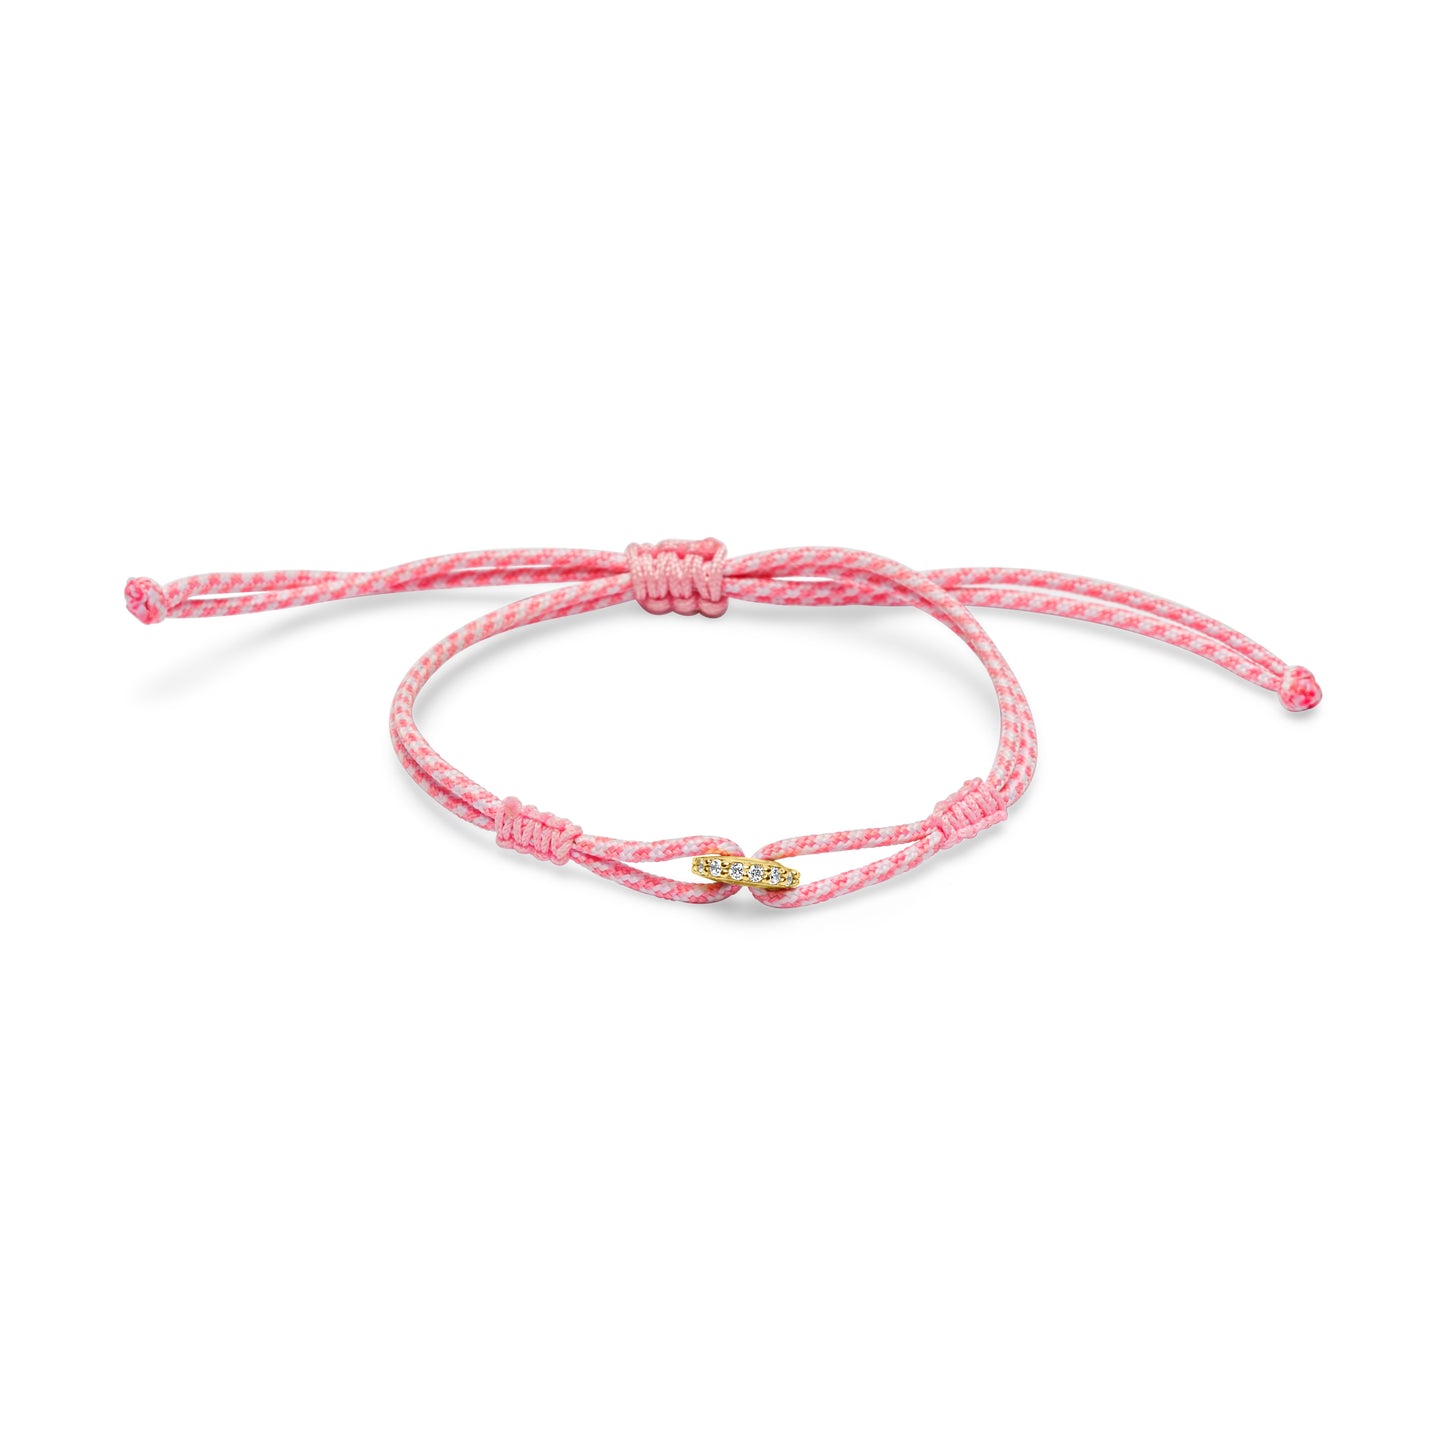 Friendship bracelet - Pink